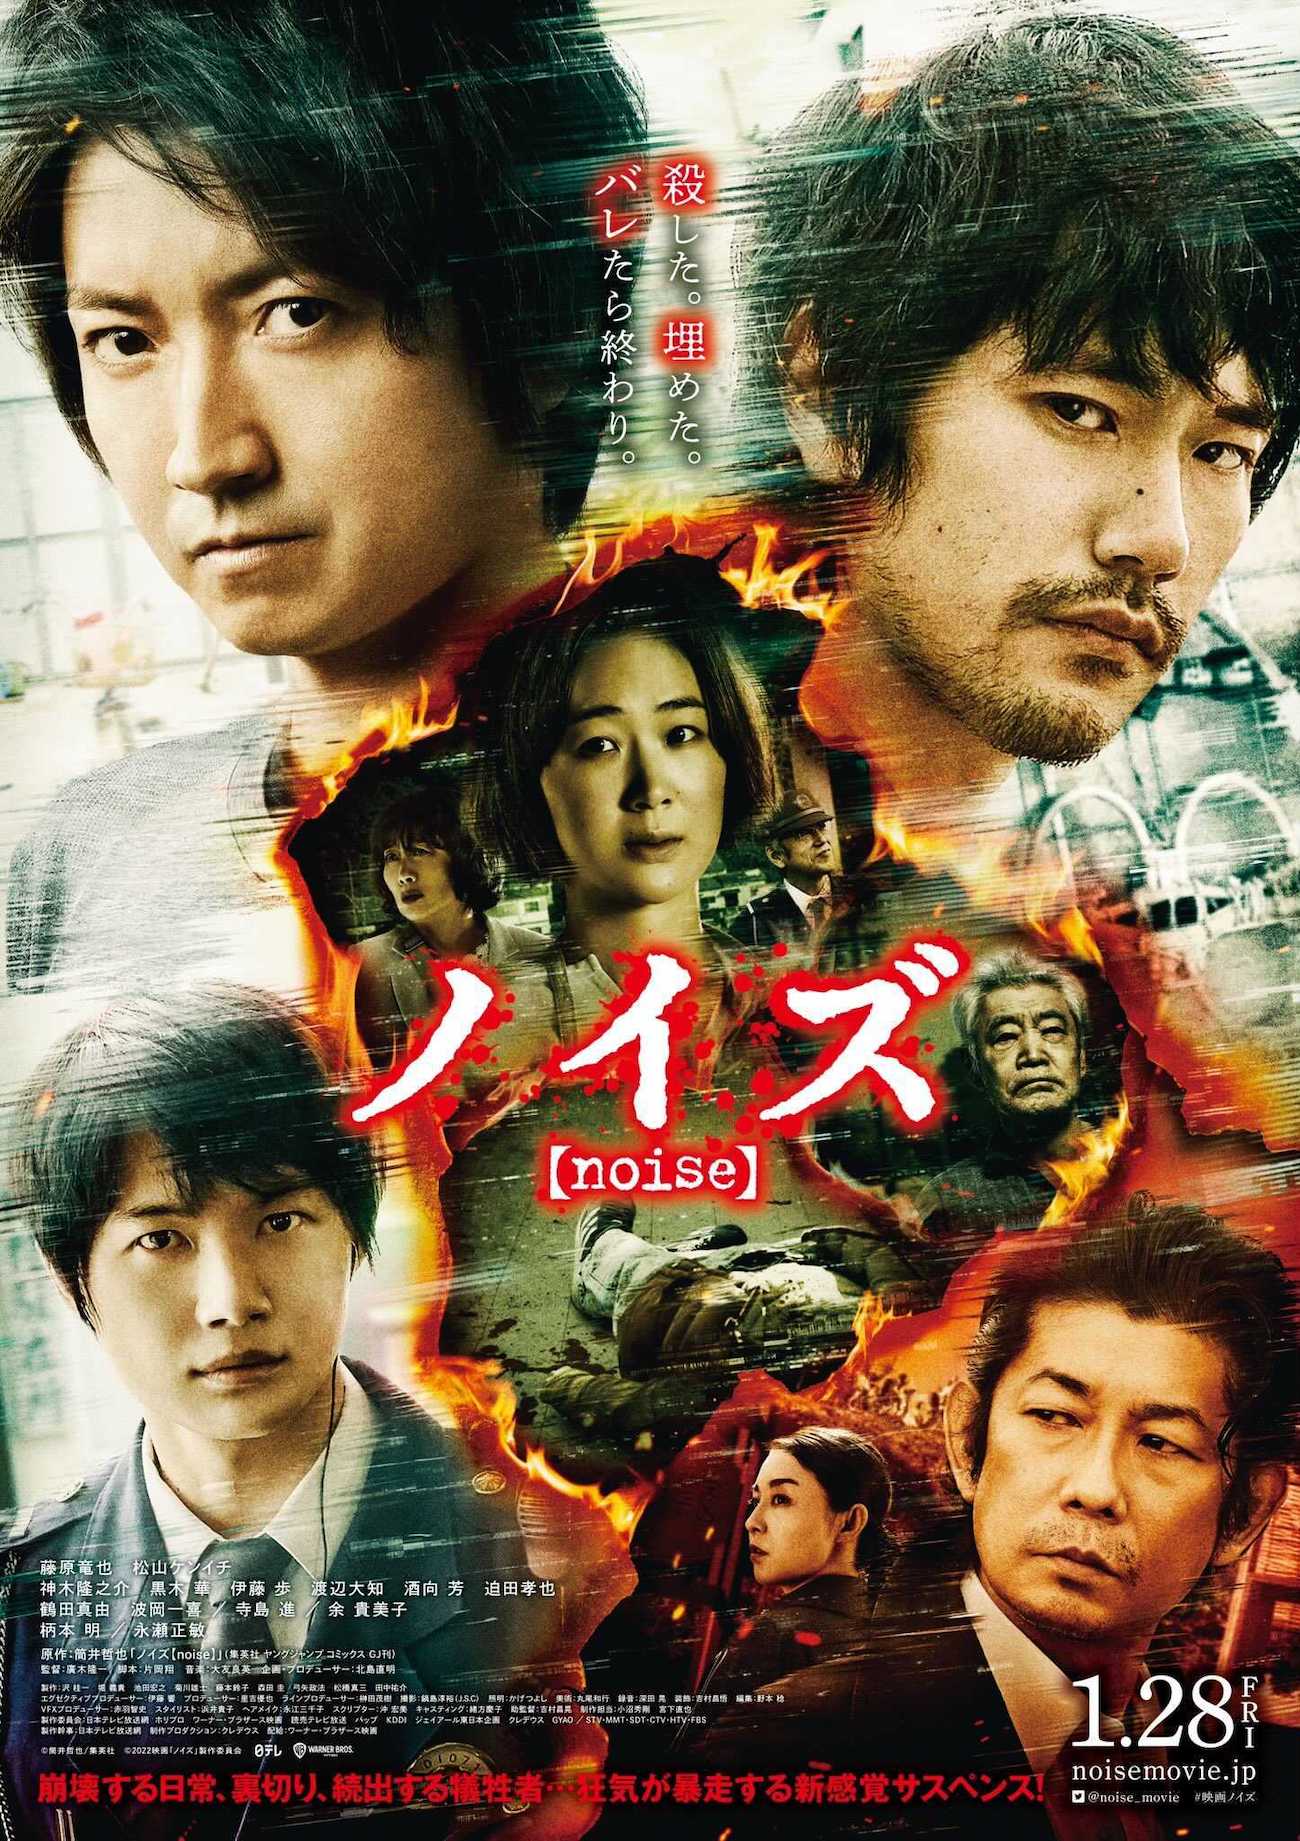 Trailer & poster for liveaction film “Noise” AsianWiki Blog